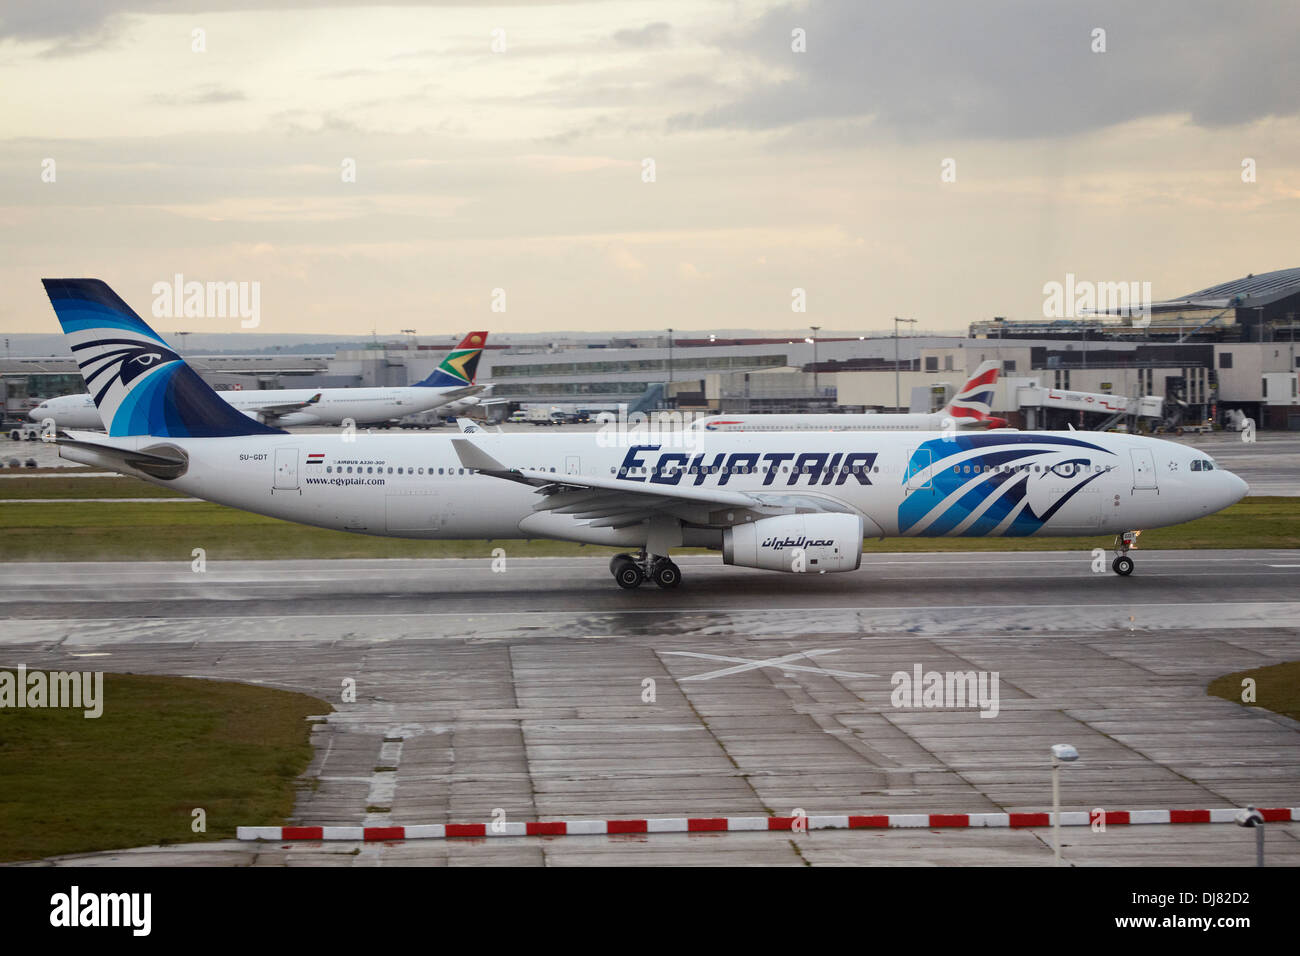 Egyptair Airbus A330 landing at London Heathrow Airport Stock Photo